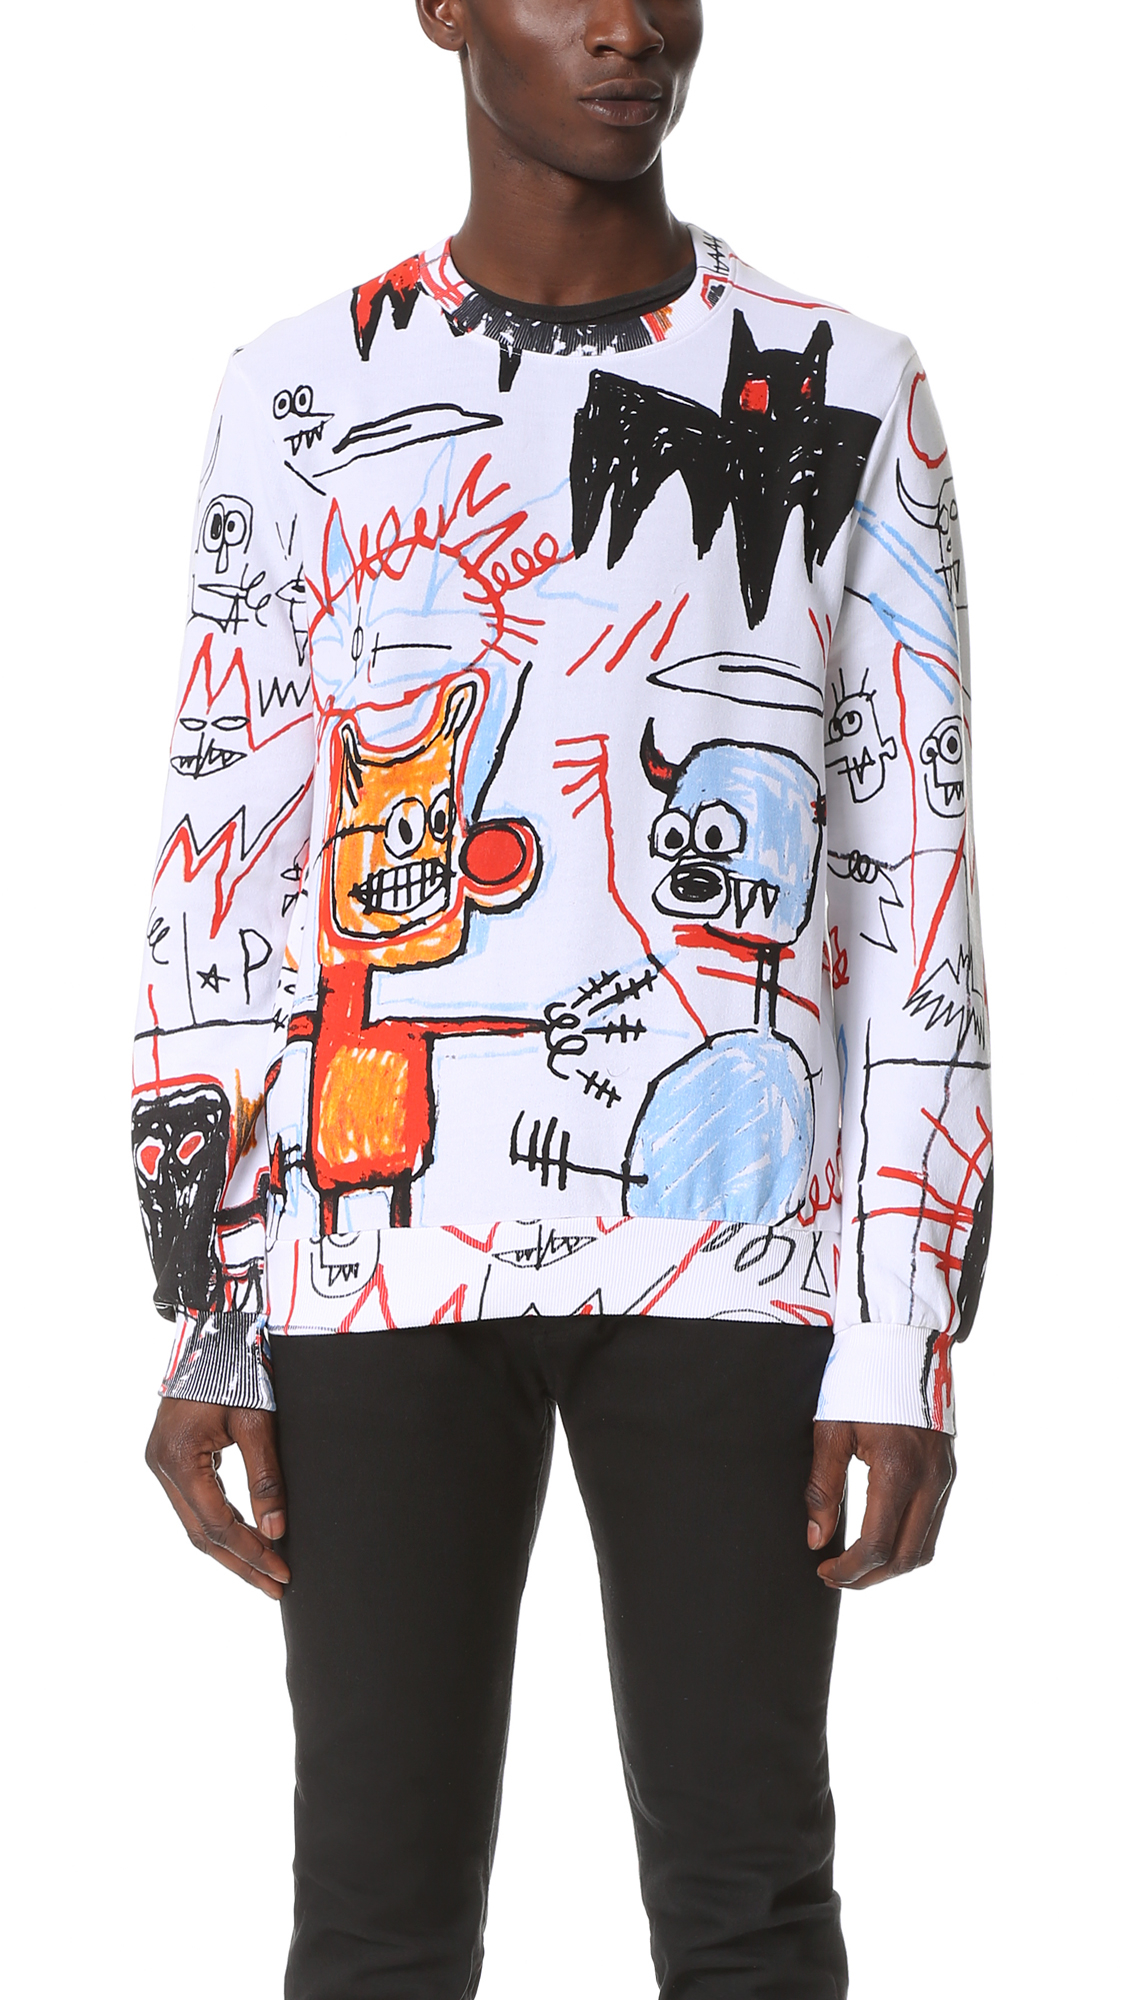 Jean Michel Basquiat Clothing - Clothes News